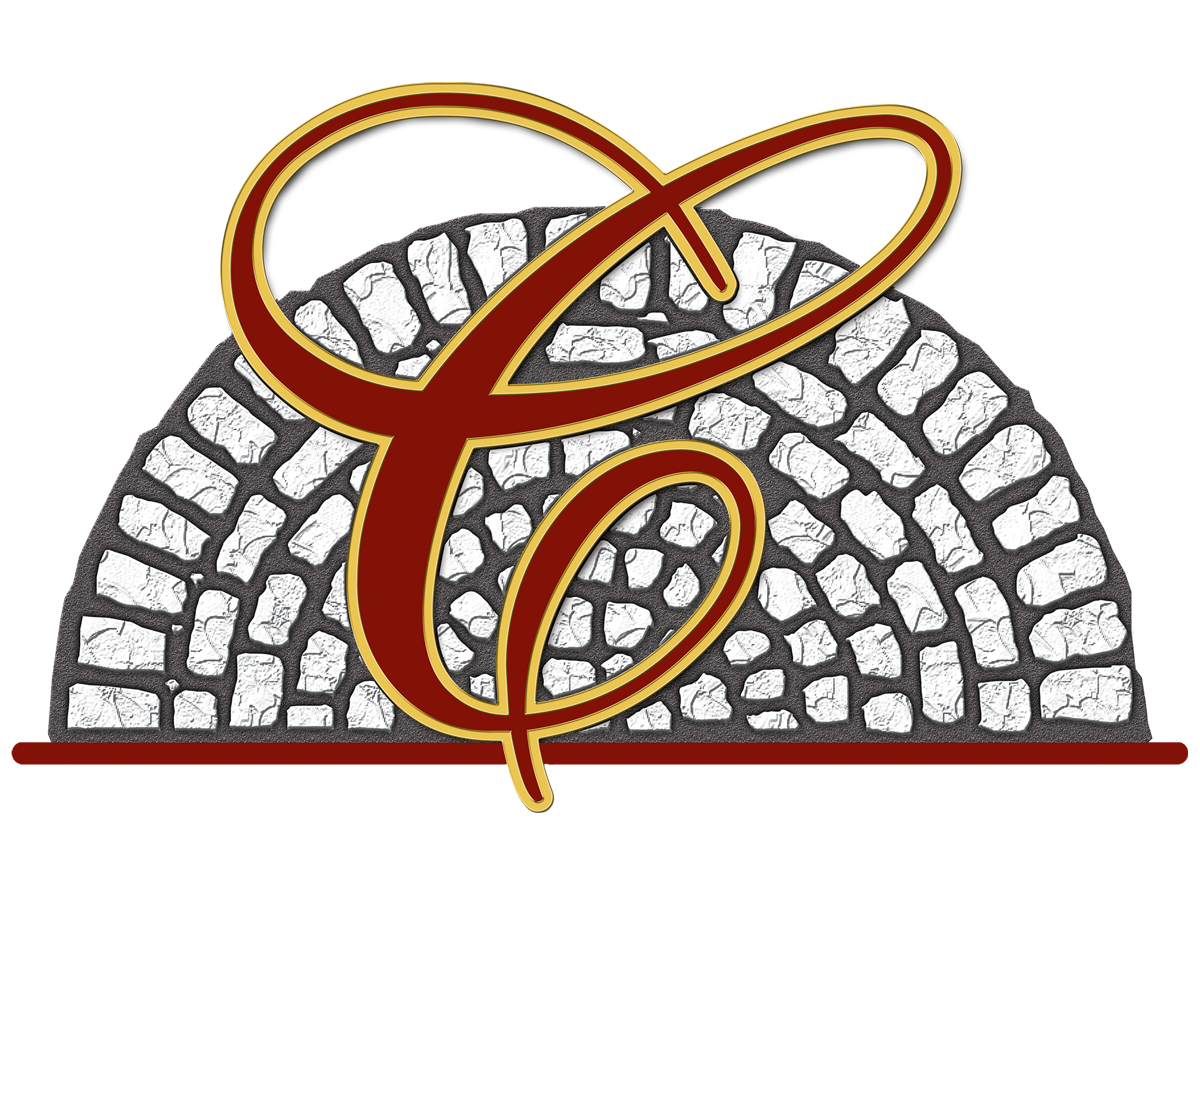 Cobblestone Homes